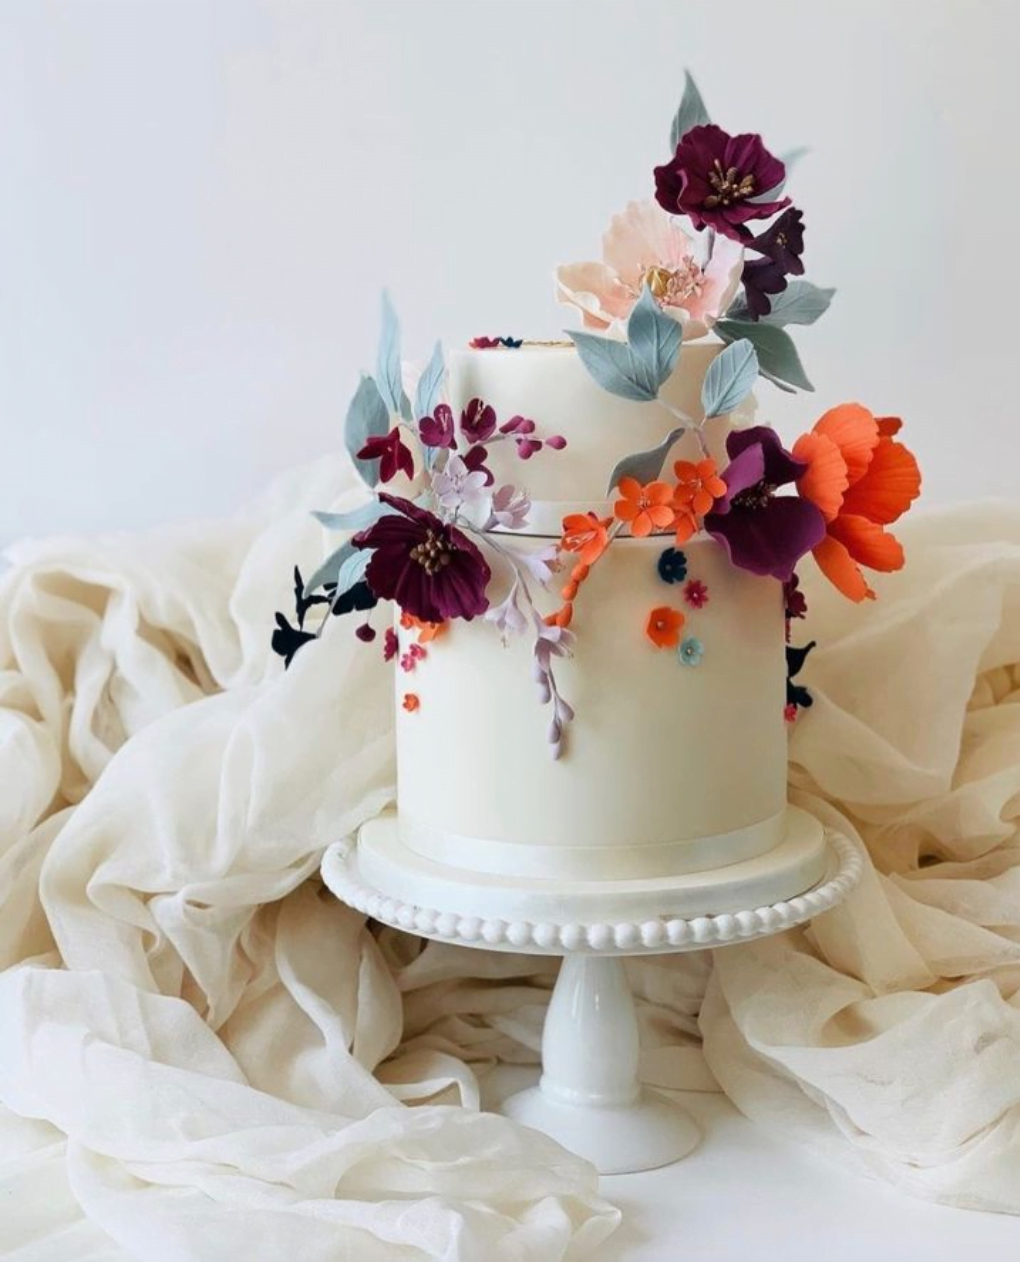 1. Creative CAKE IDEAS FOR GIRLS - Cake Palace